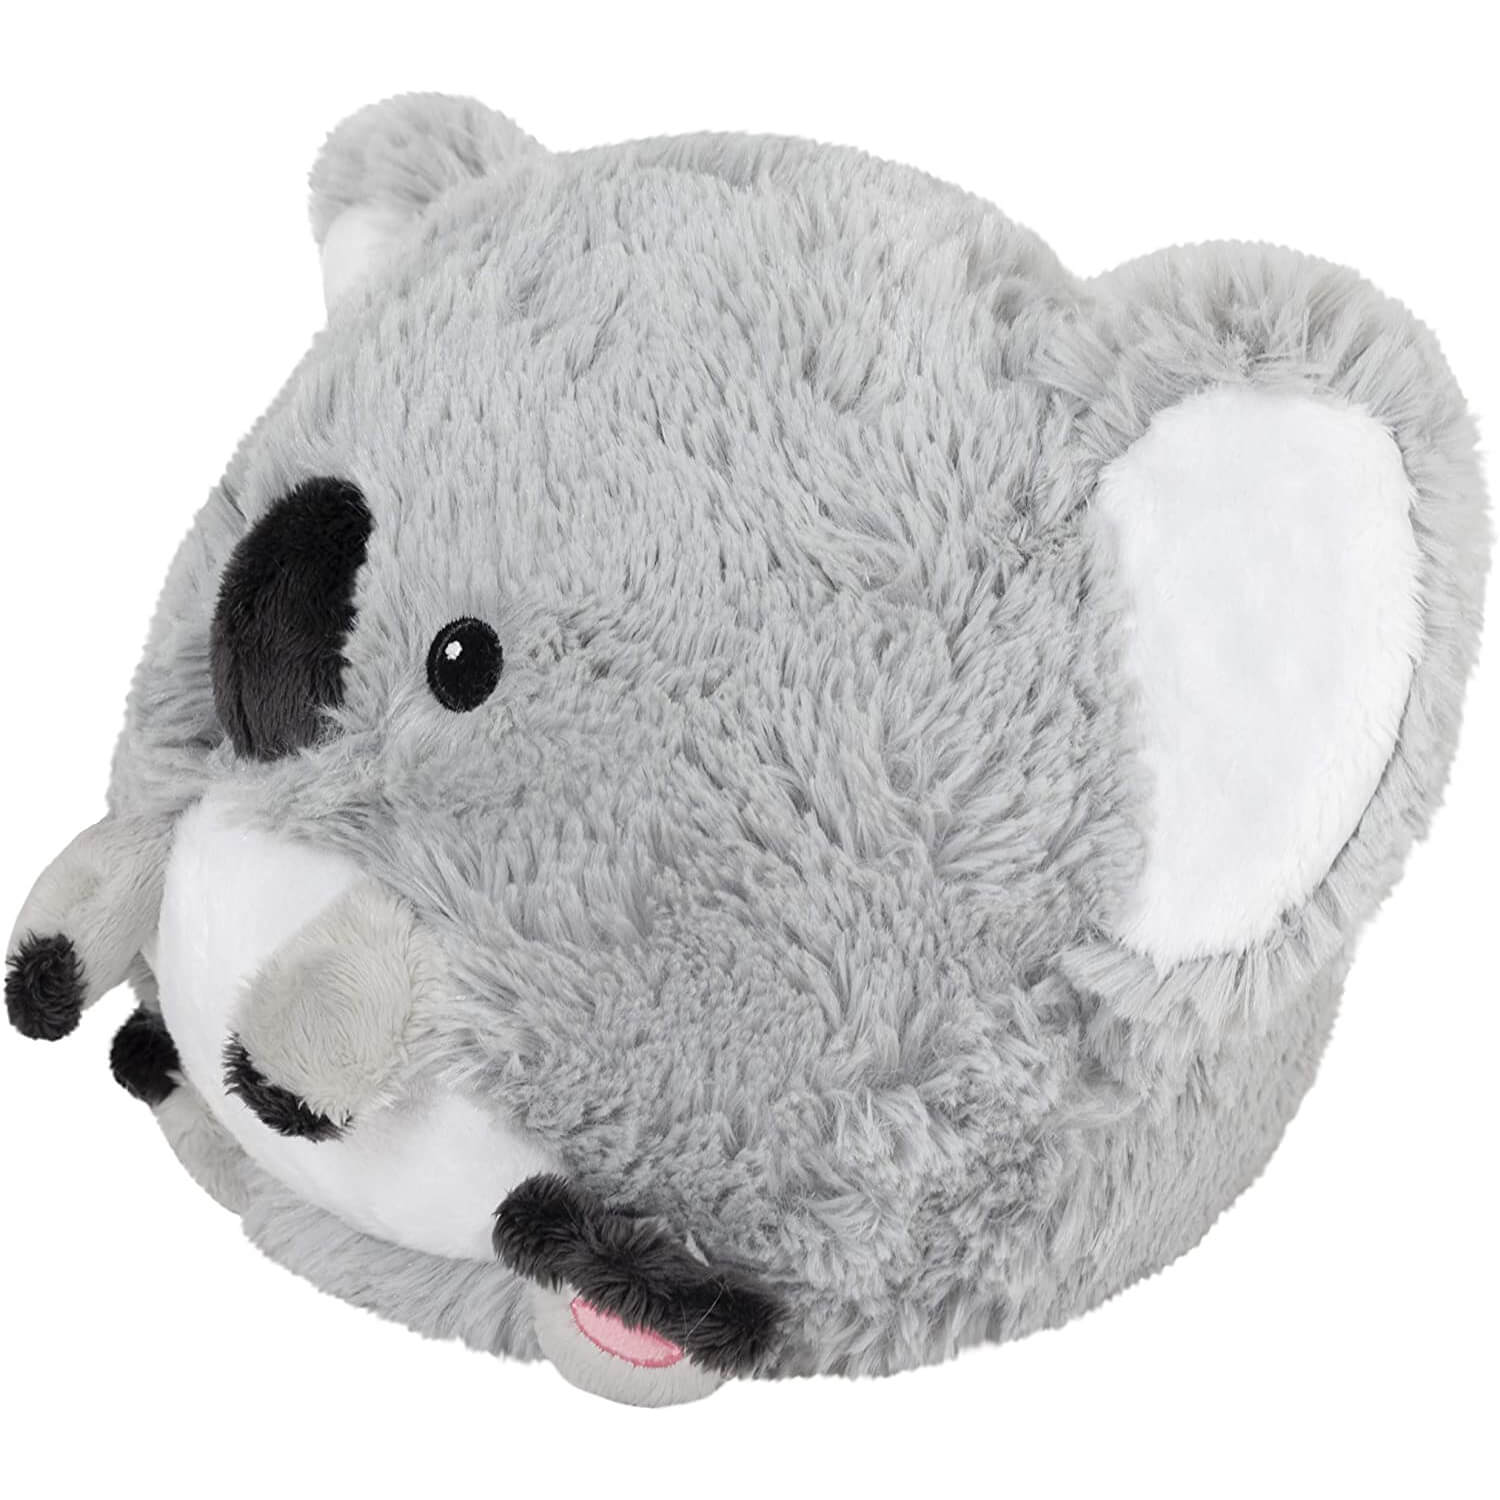 Mini Squishable Baby Koala 7" Plush